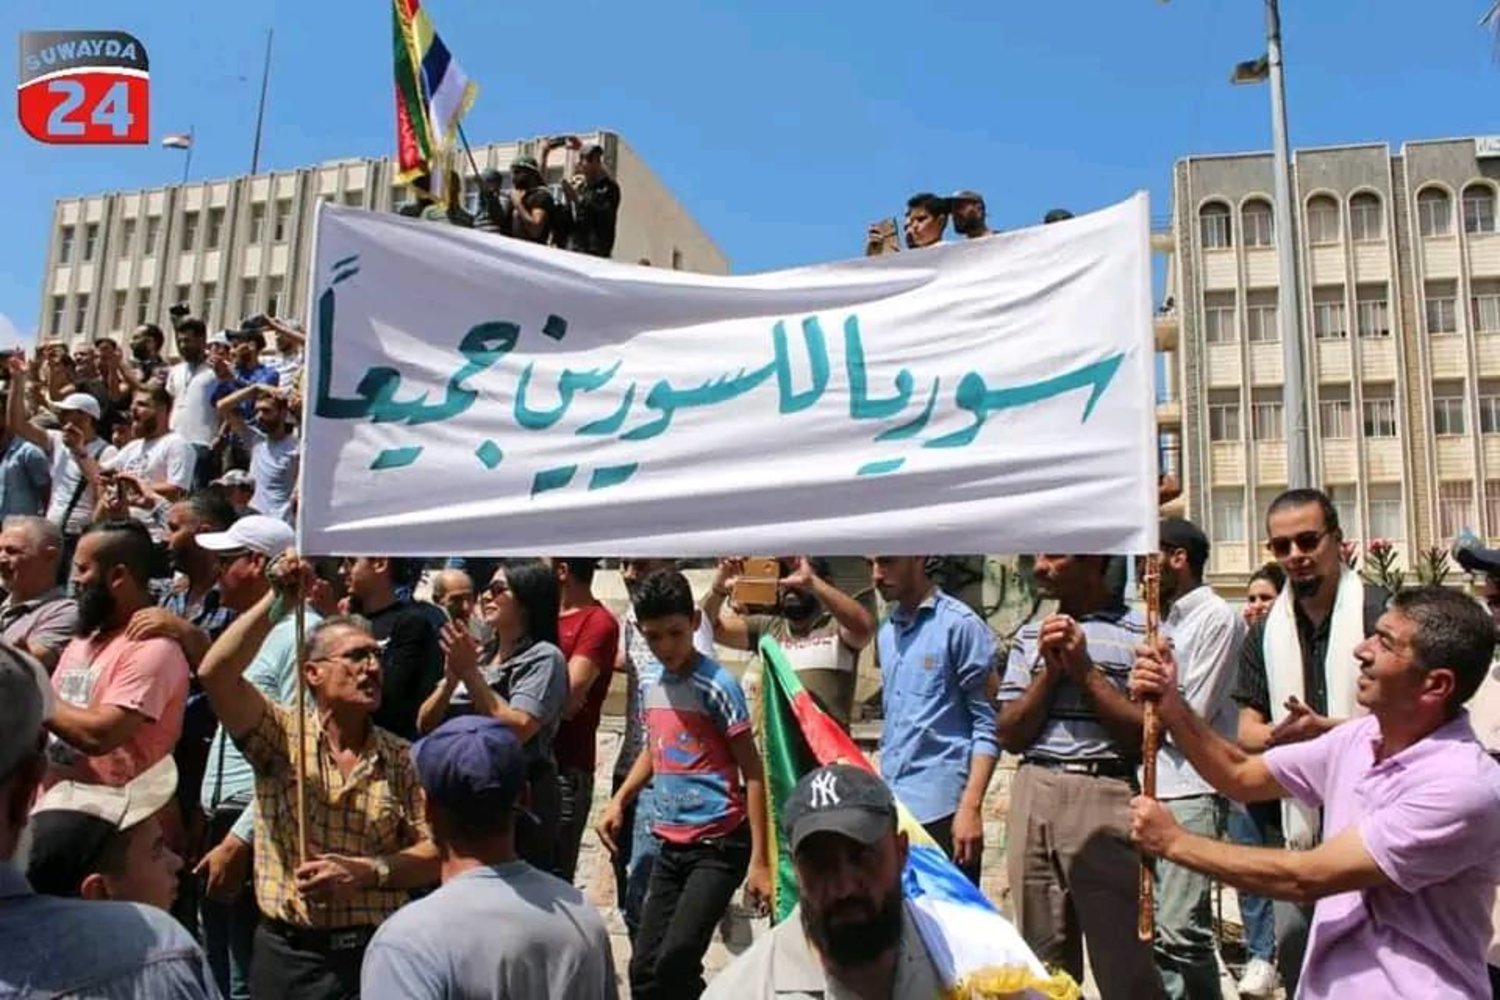 Suriye Süveyda'daki Protestolar Komplo Mu?